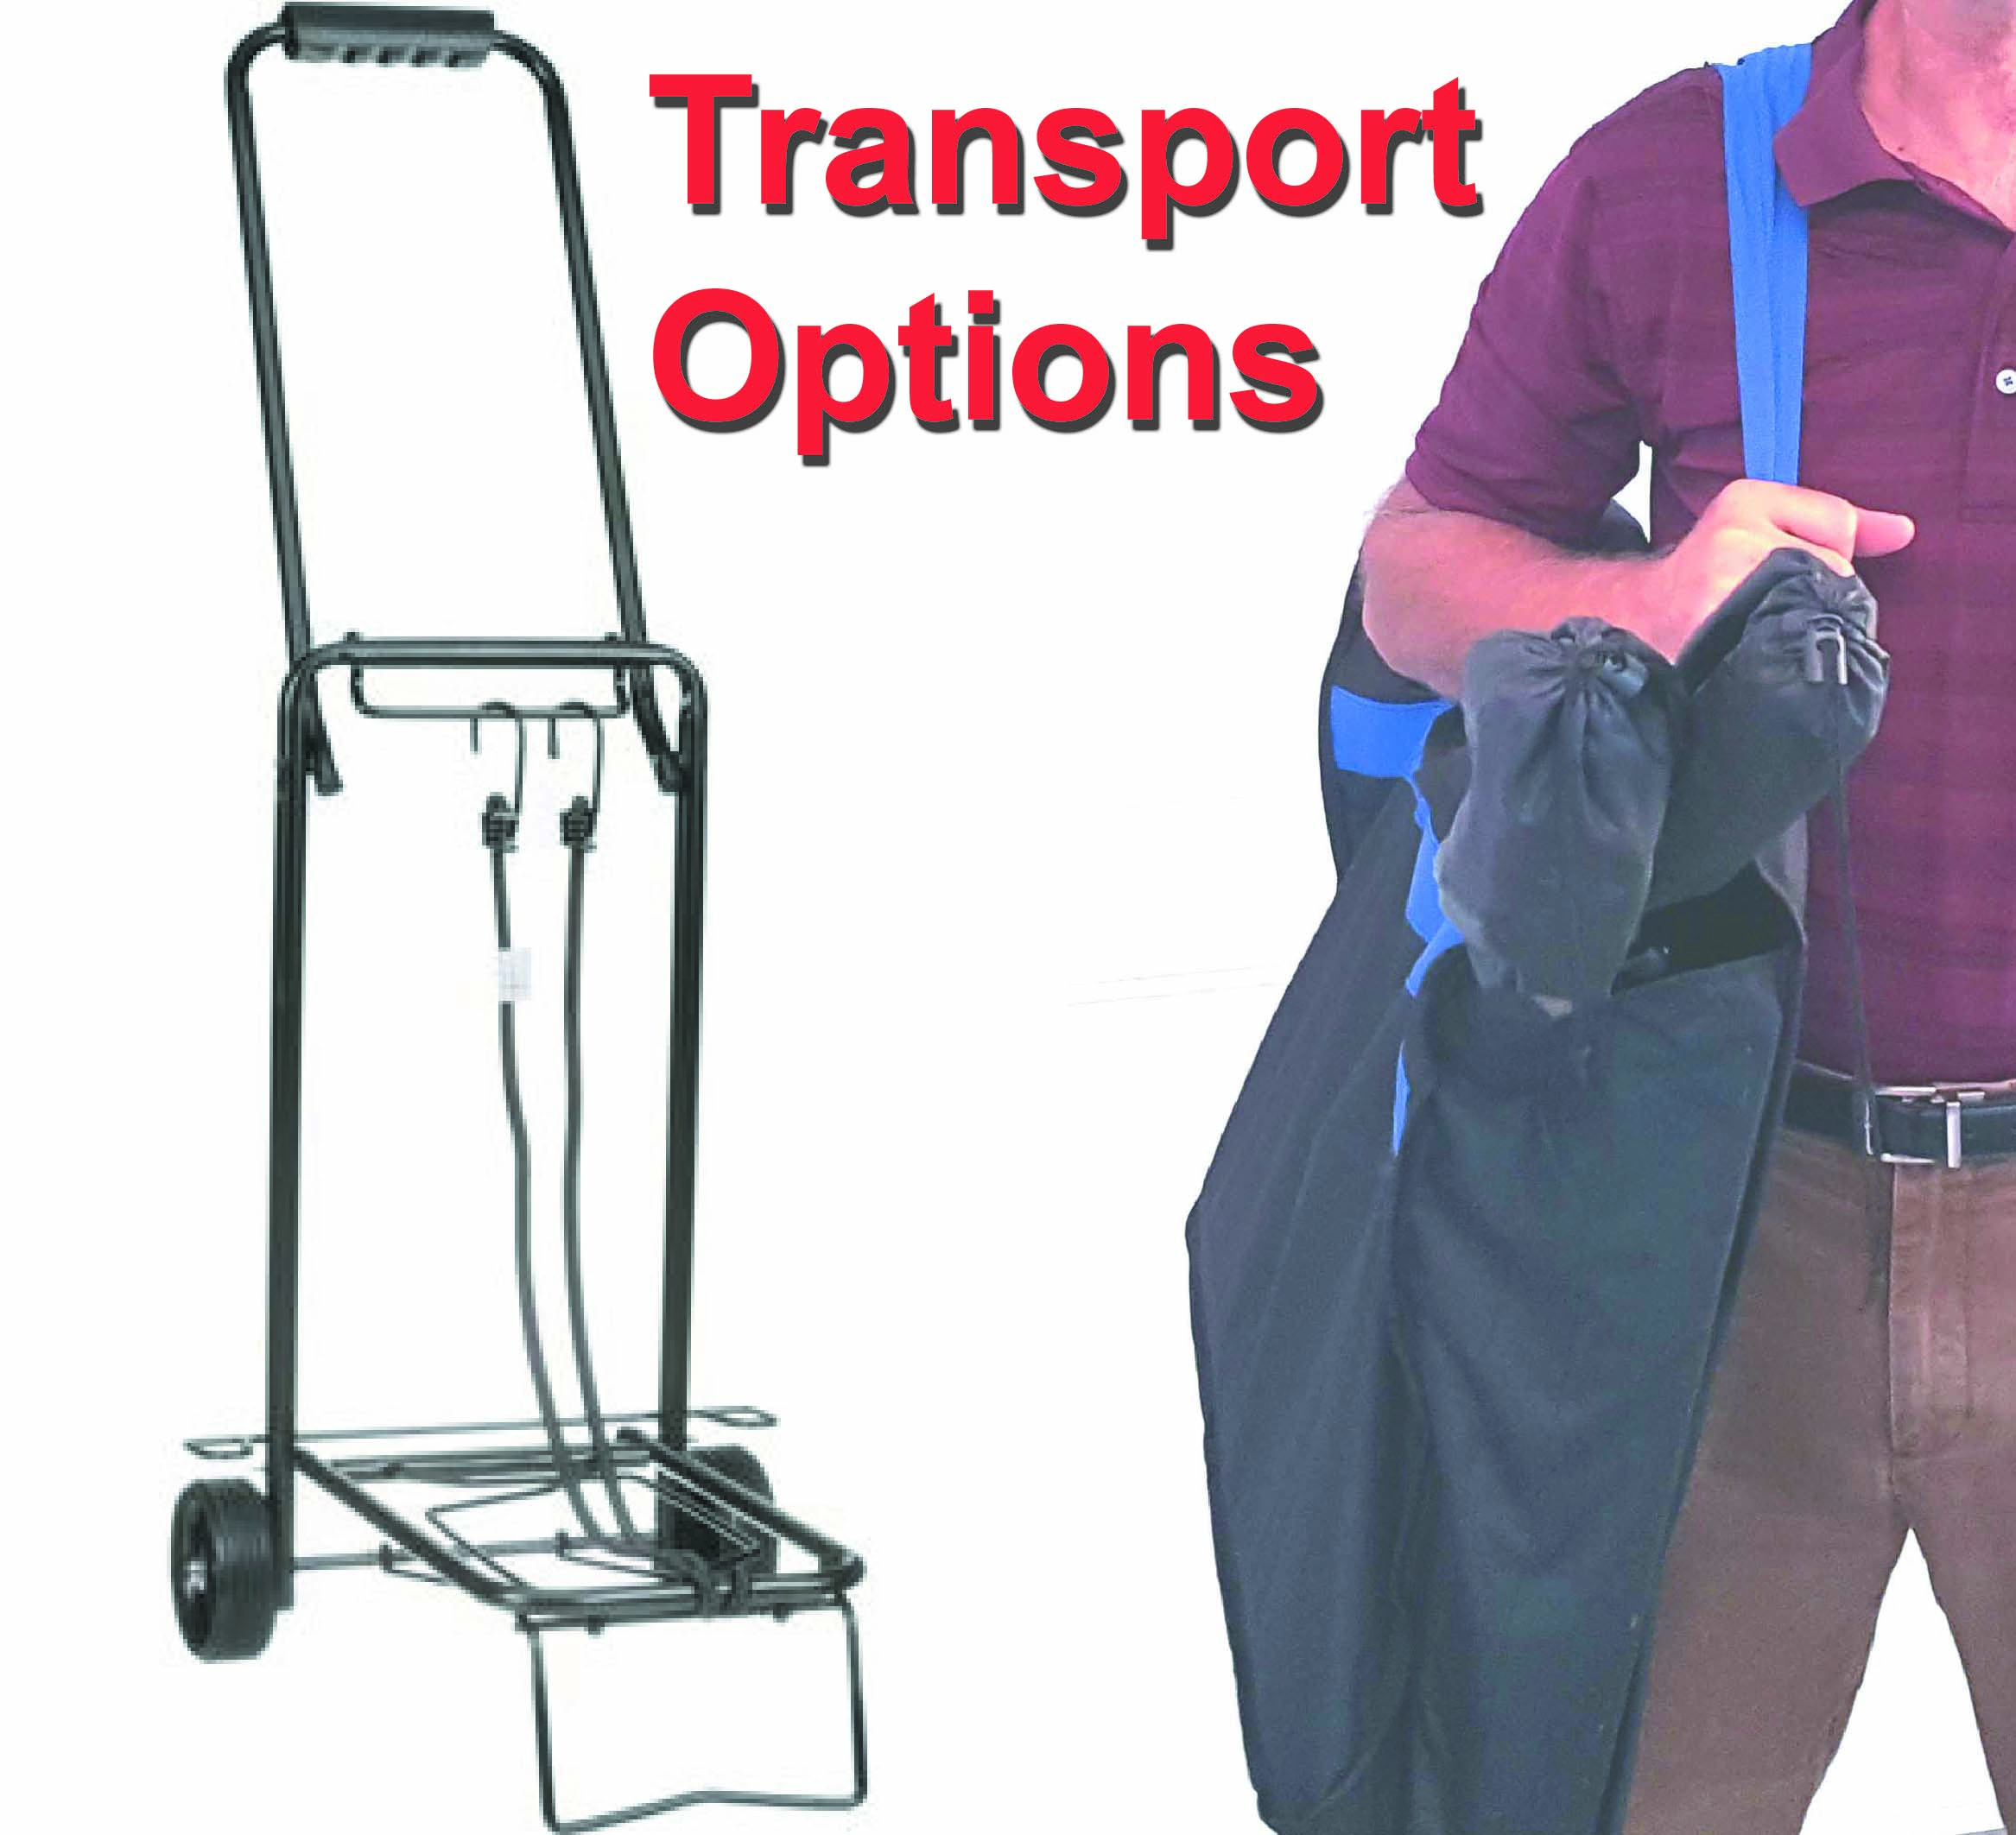 TransportOptions.jpg